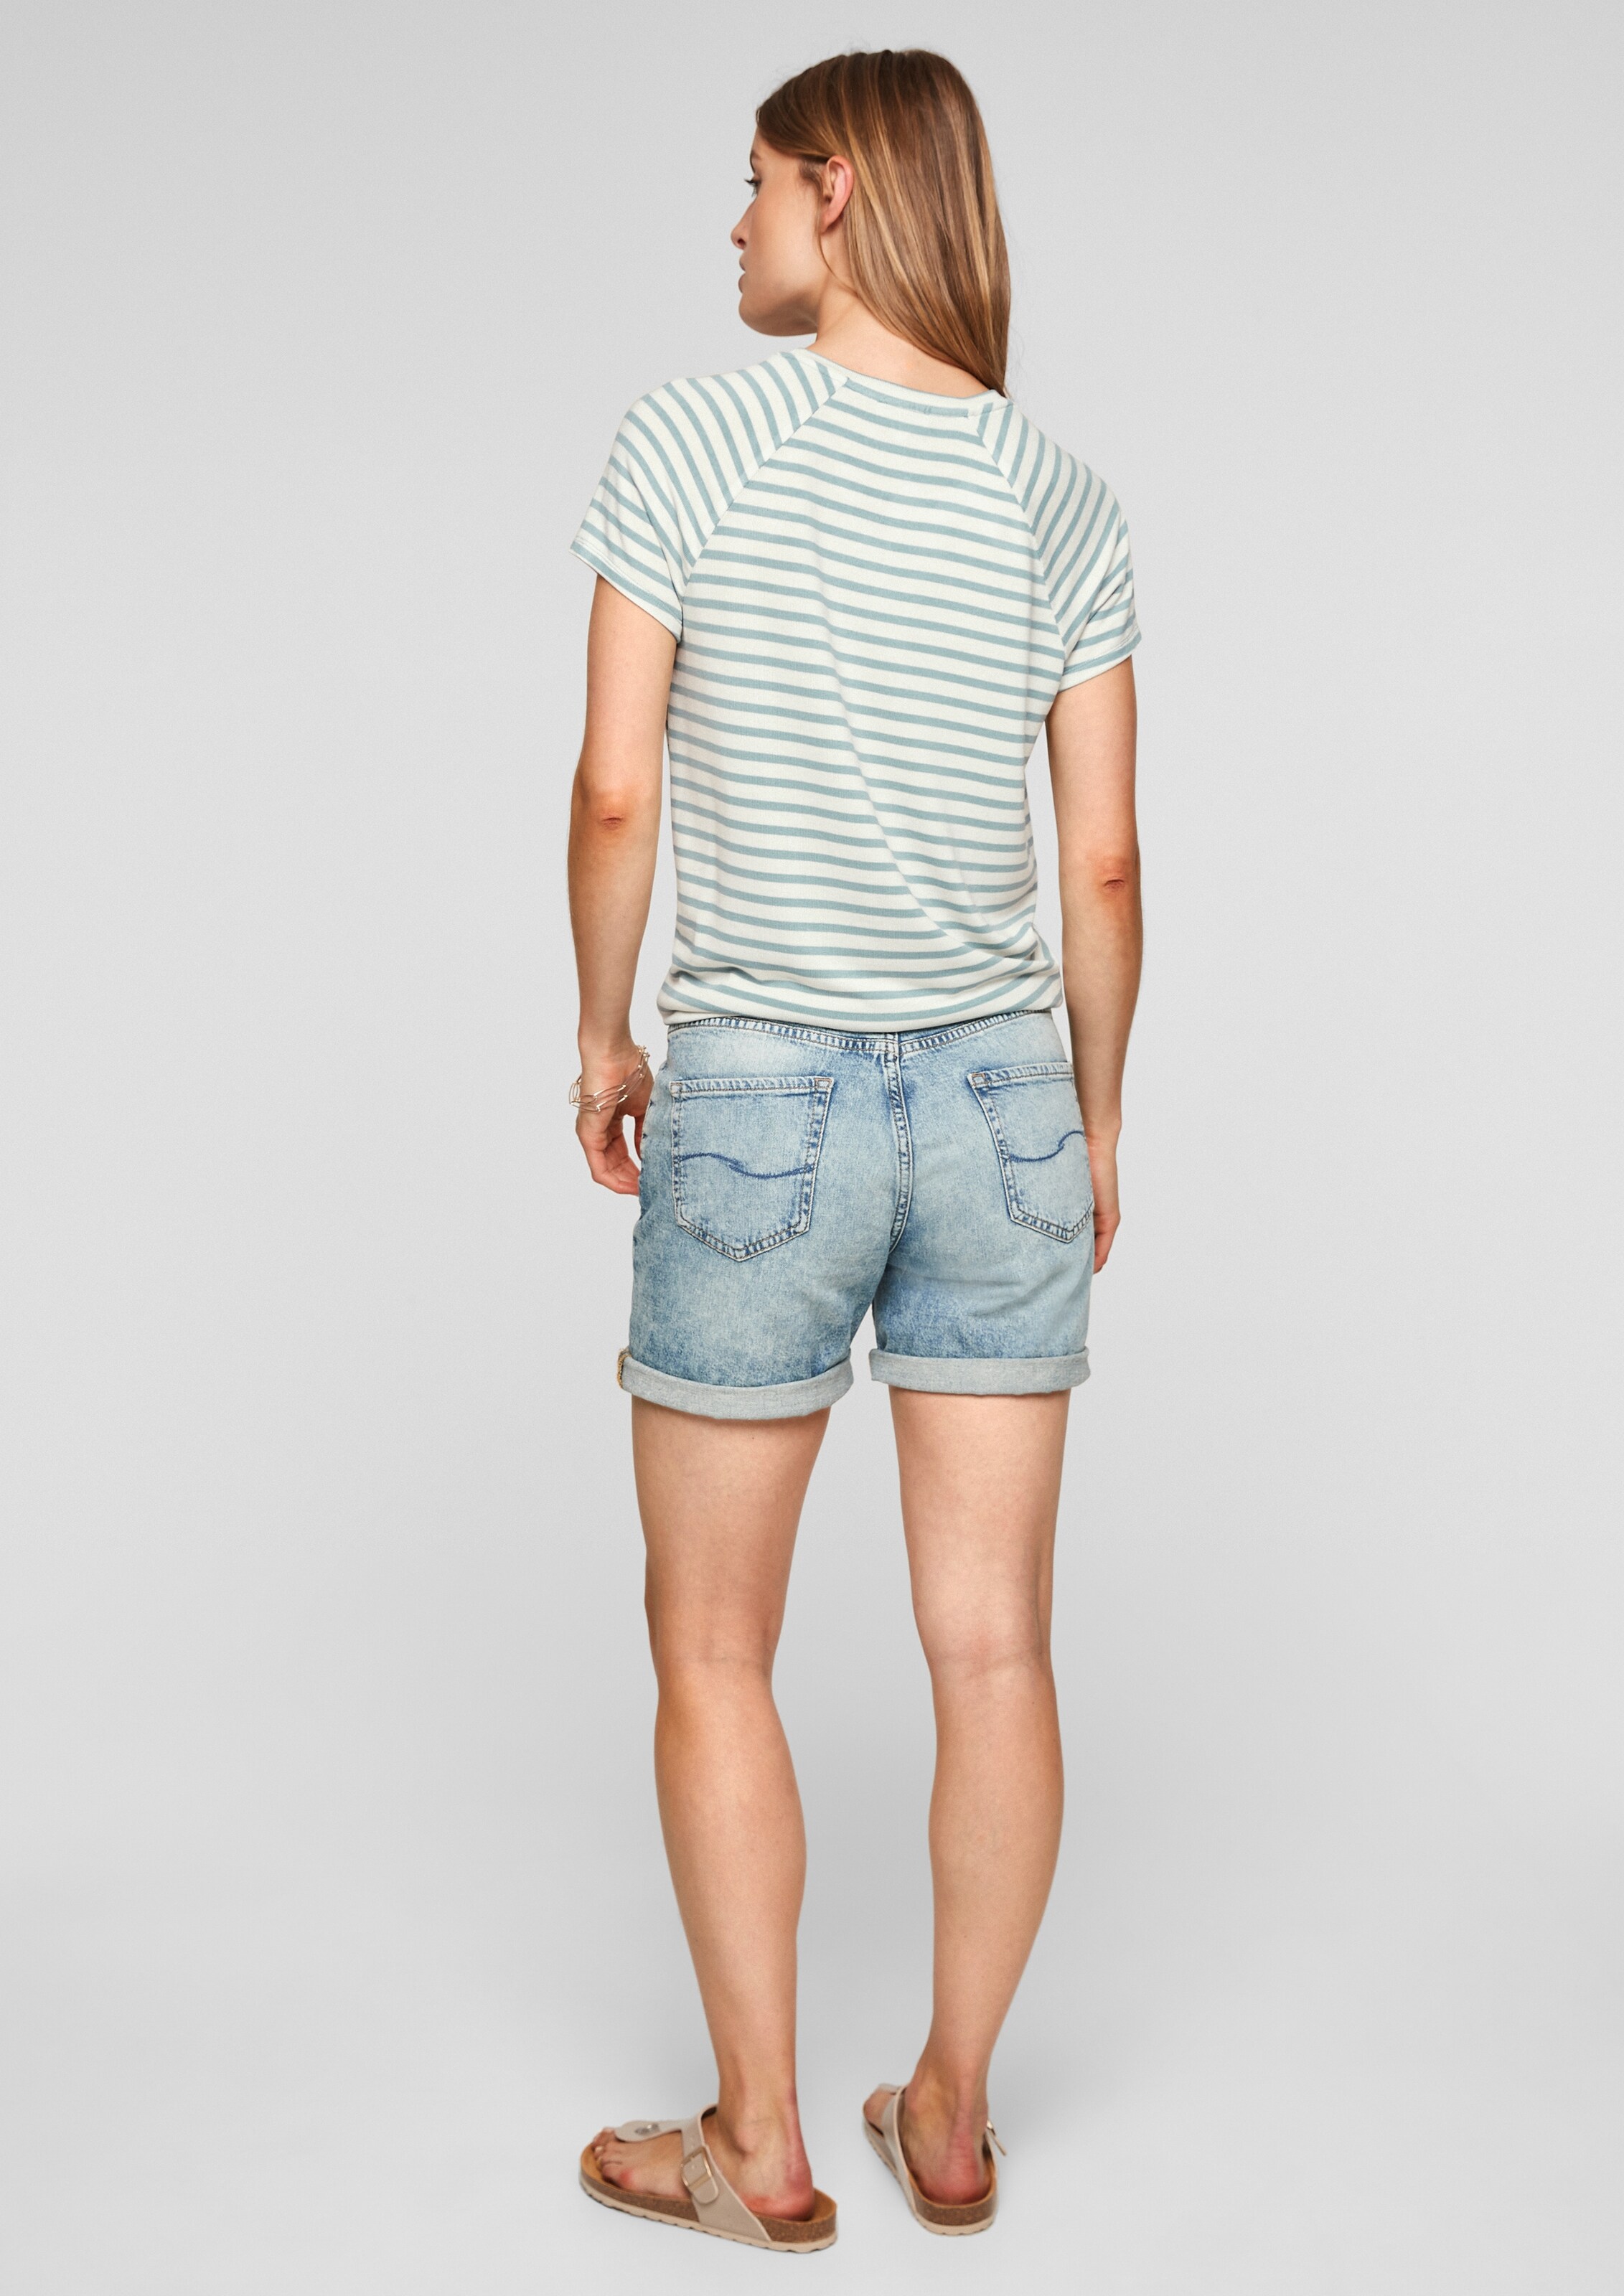 Frauen Shirts & Tops s.Oliver Shirt in Mint, Weiß - UT65535